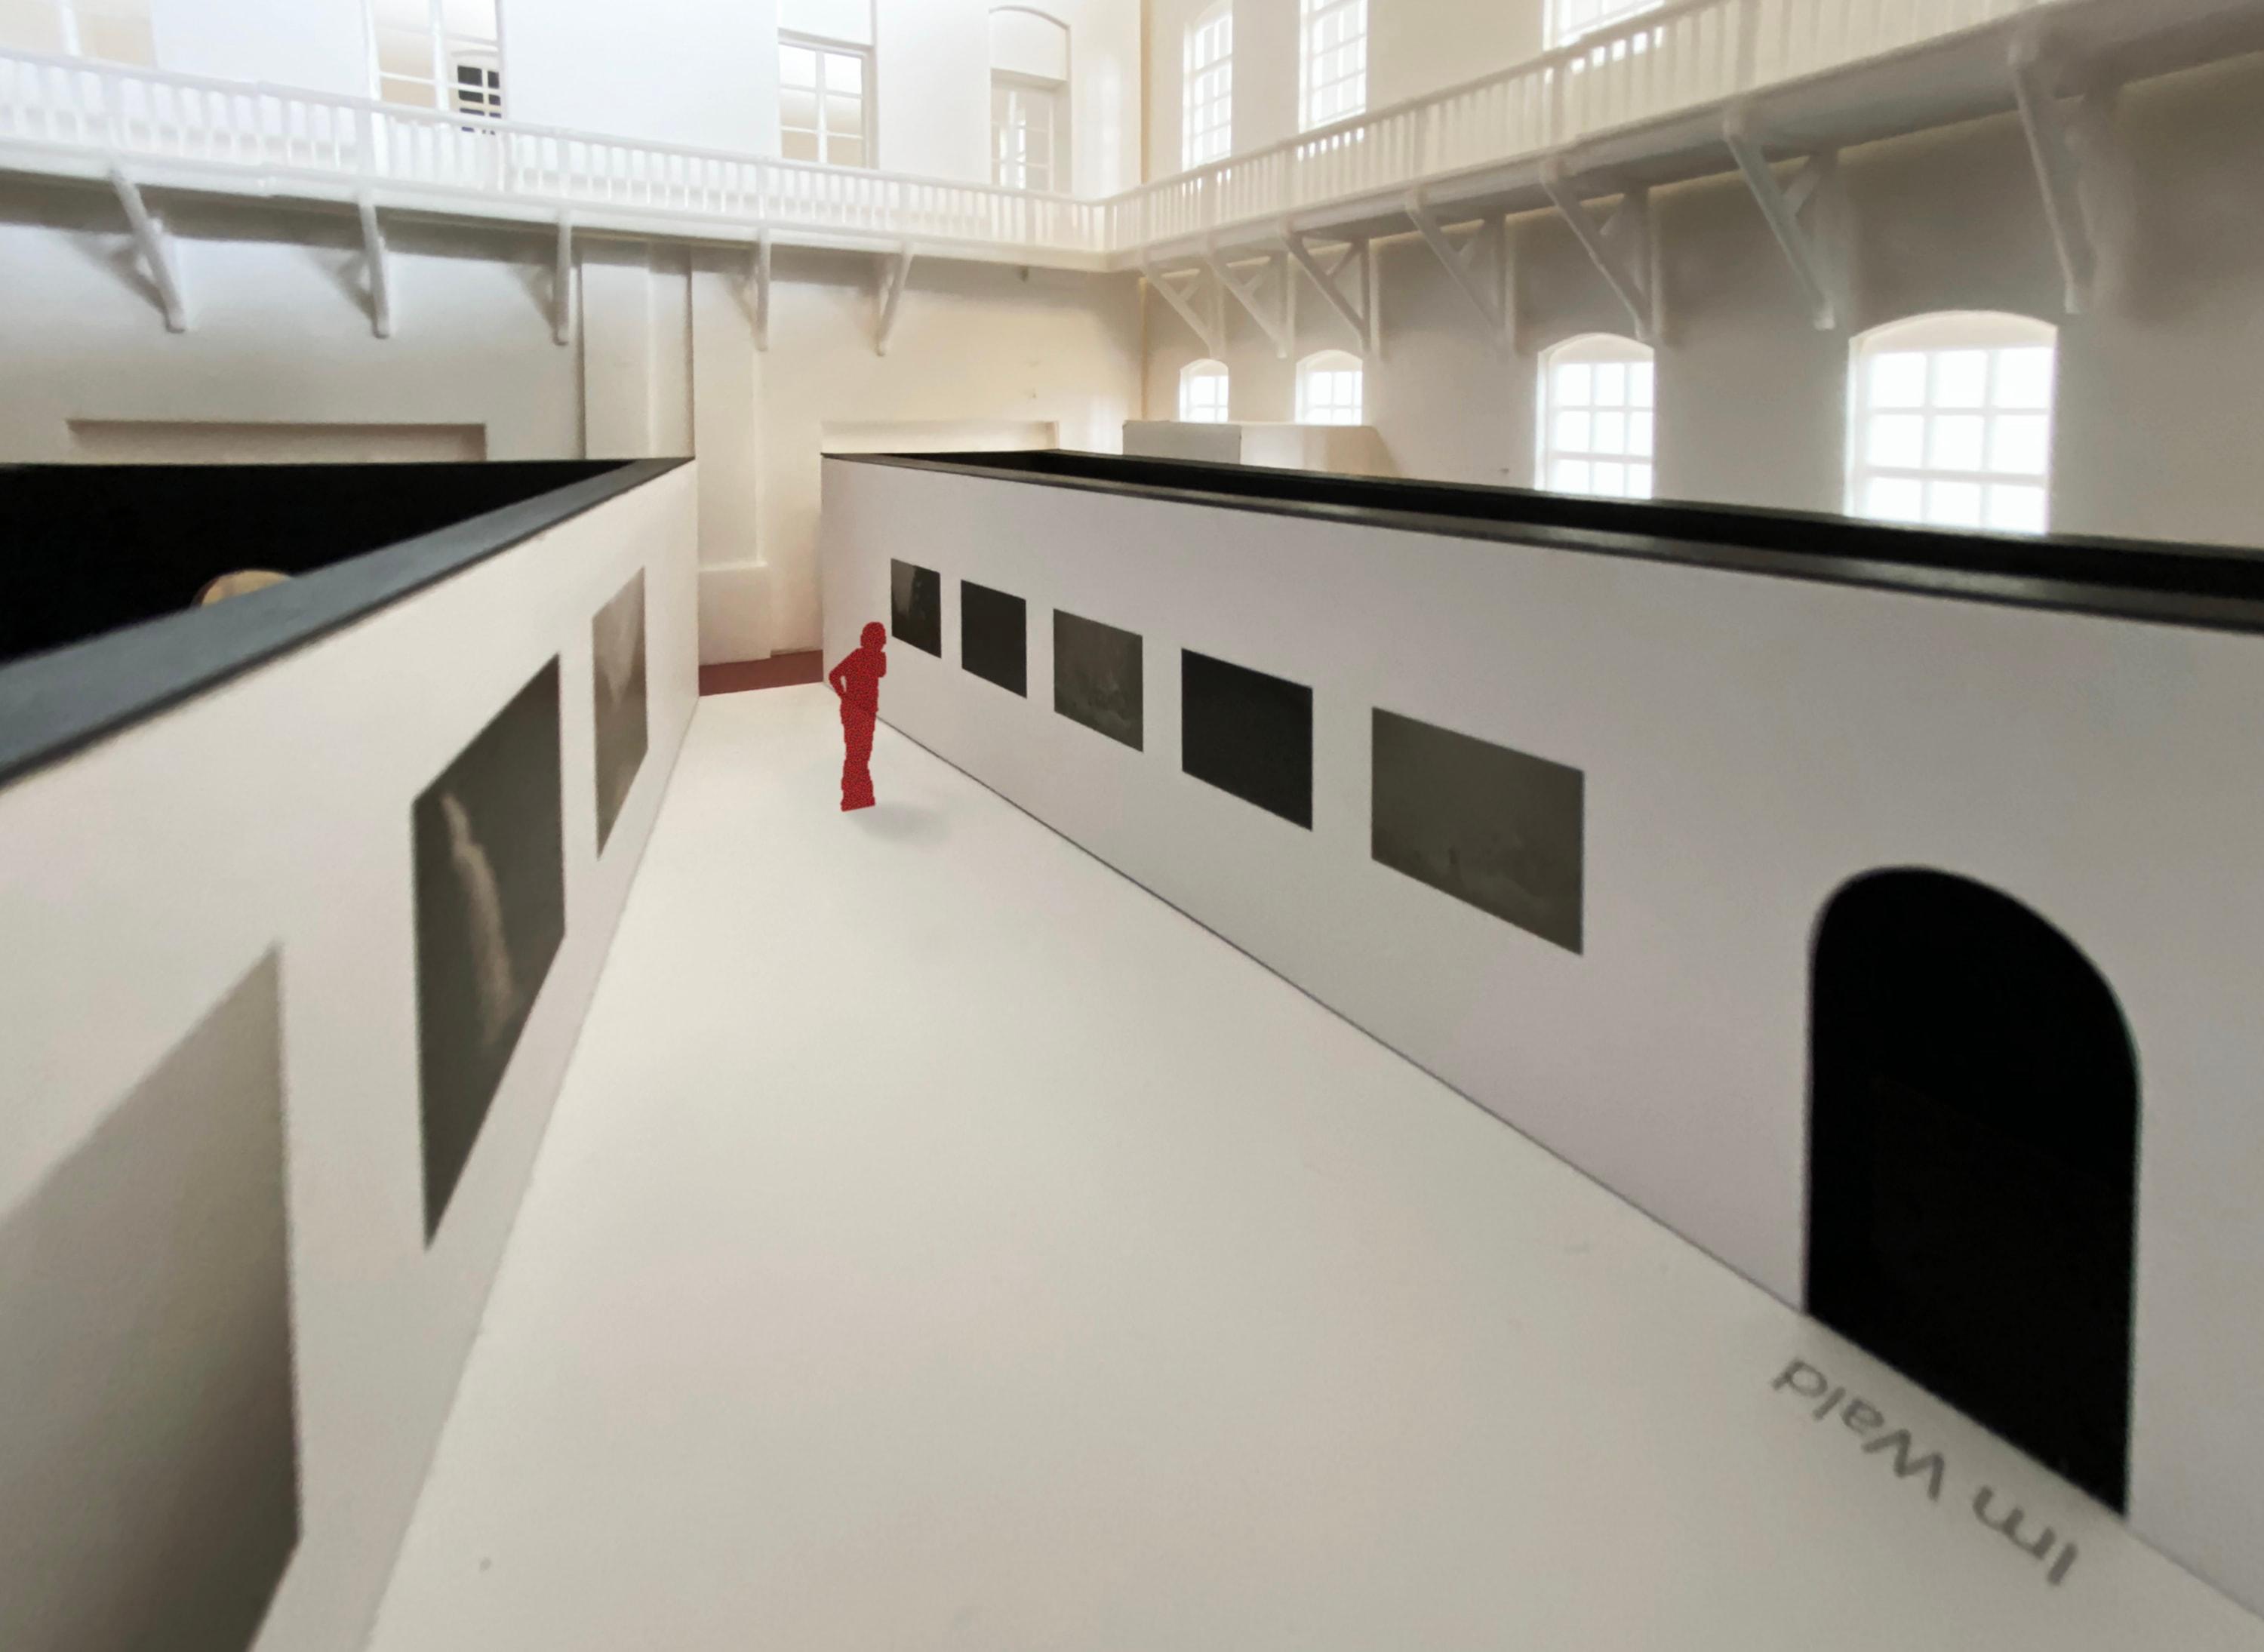 「KYOTOGRAPHIE 2021」、写真家アーウィン・オラフの展示空間は遠藤克彦建築研究所がデザイン - Slide:3